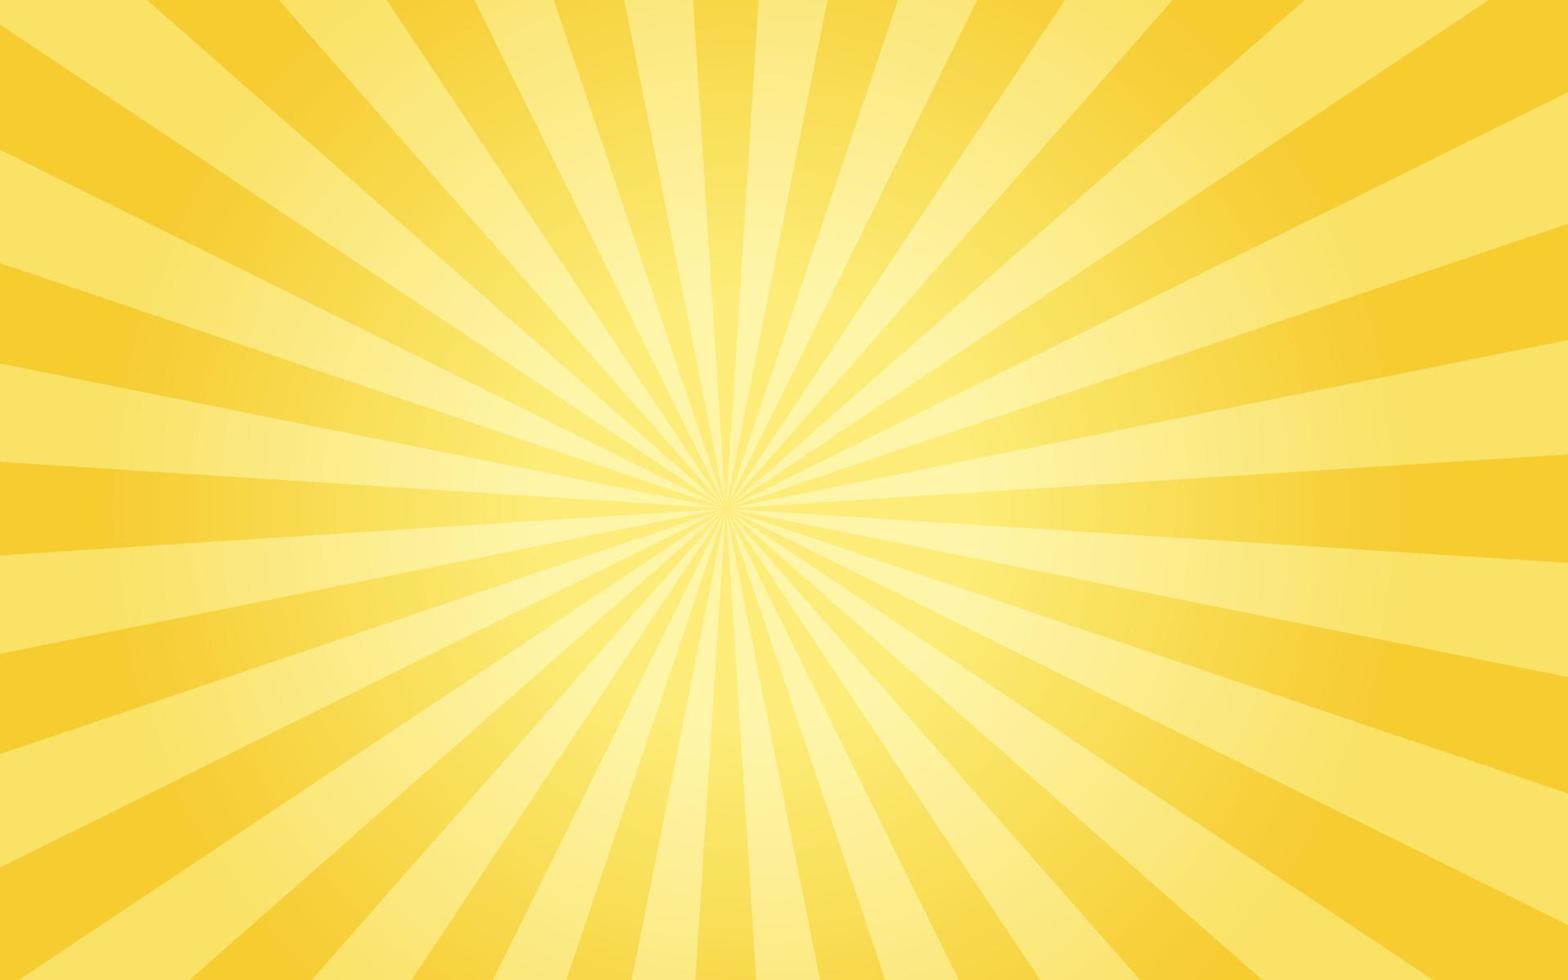 zonnestralen retro vintage stijl op gele achtergrond, sunburst patroon achtergrond. zomer vectorillustratie vector